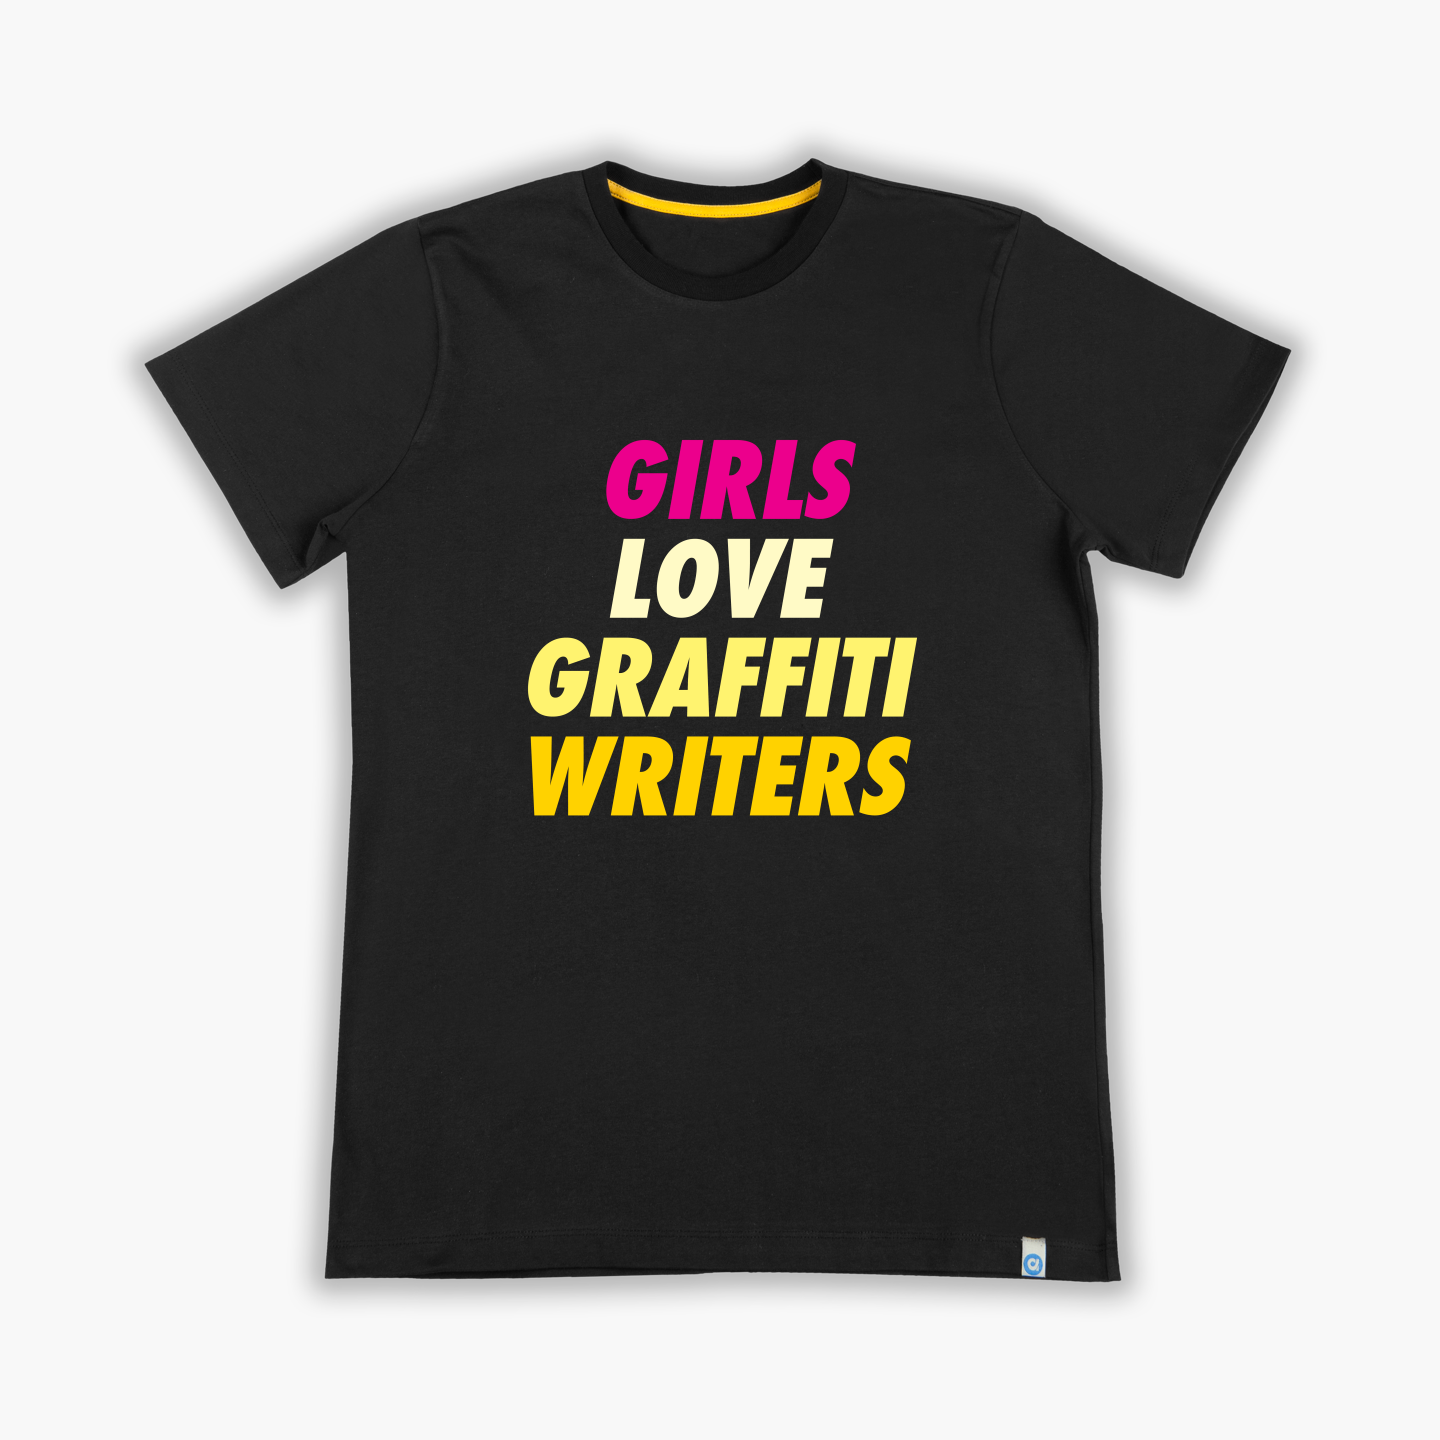 Girls love graffiti writers - Tişört